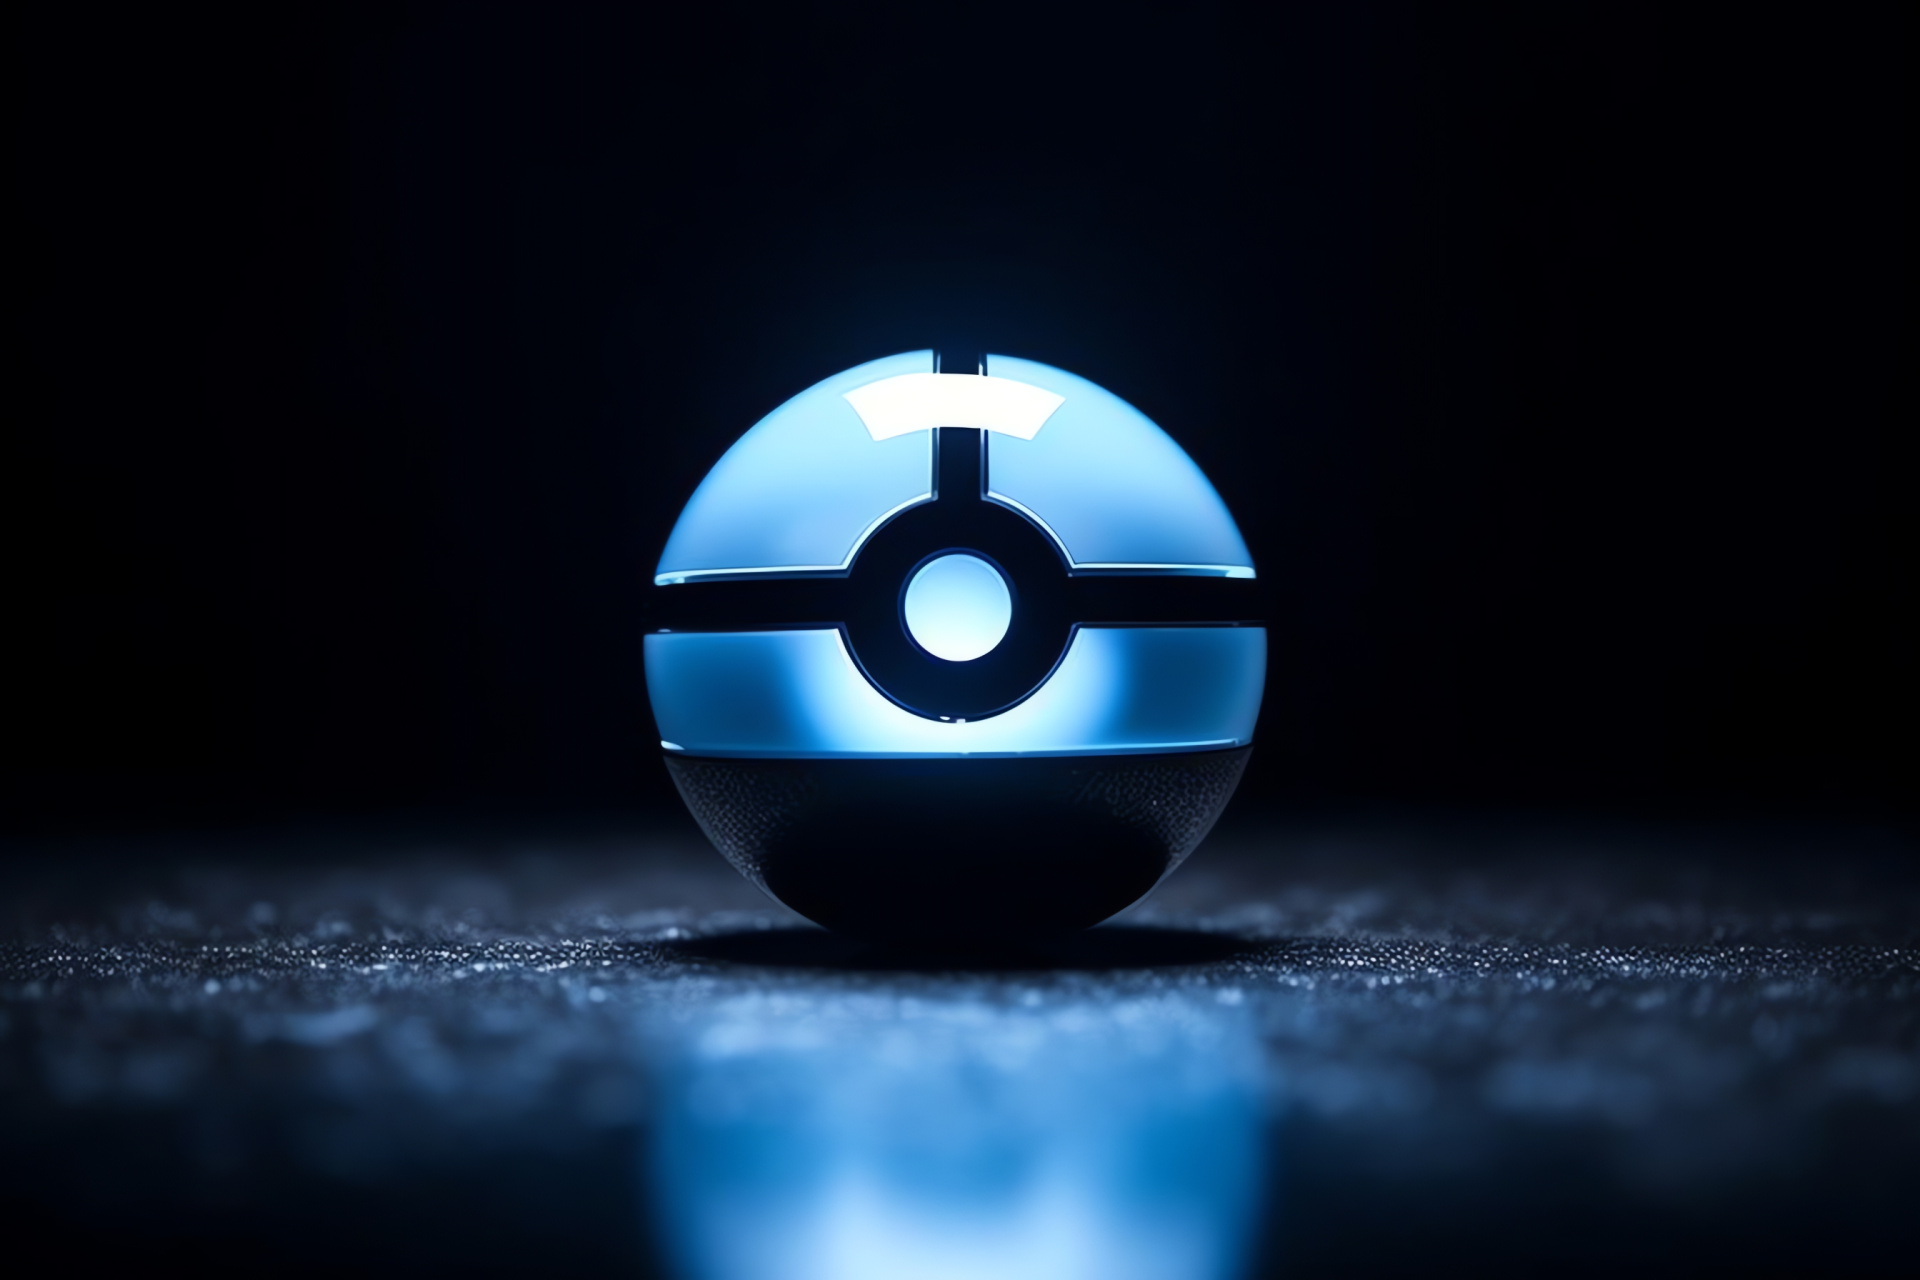 Pokeball, Blue-hued sphere, Essential Pokmon gear, Solid black background, Essential trainer device, HD Desktop Image